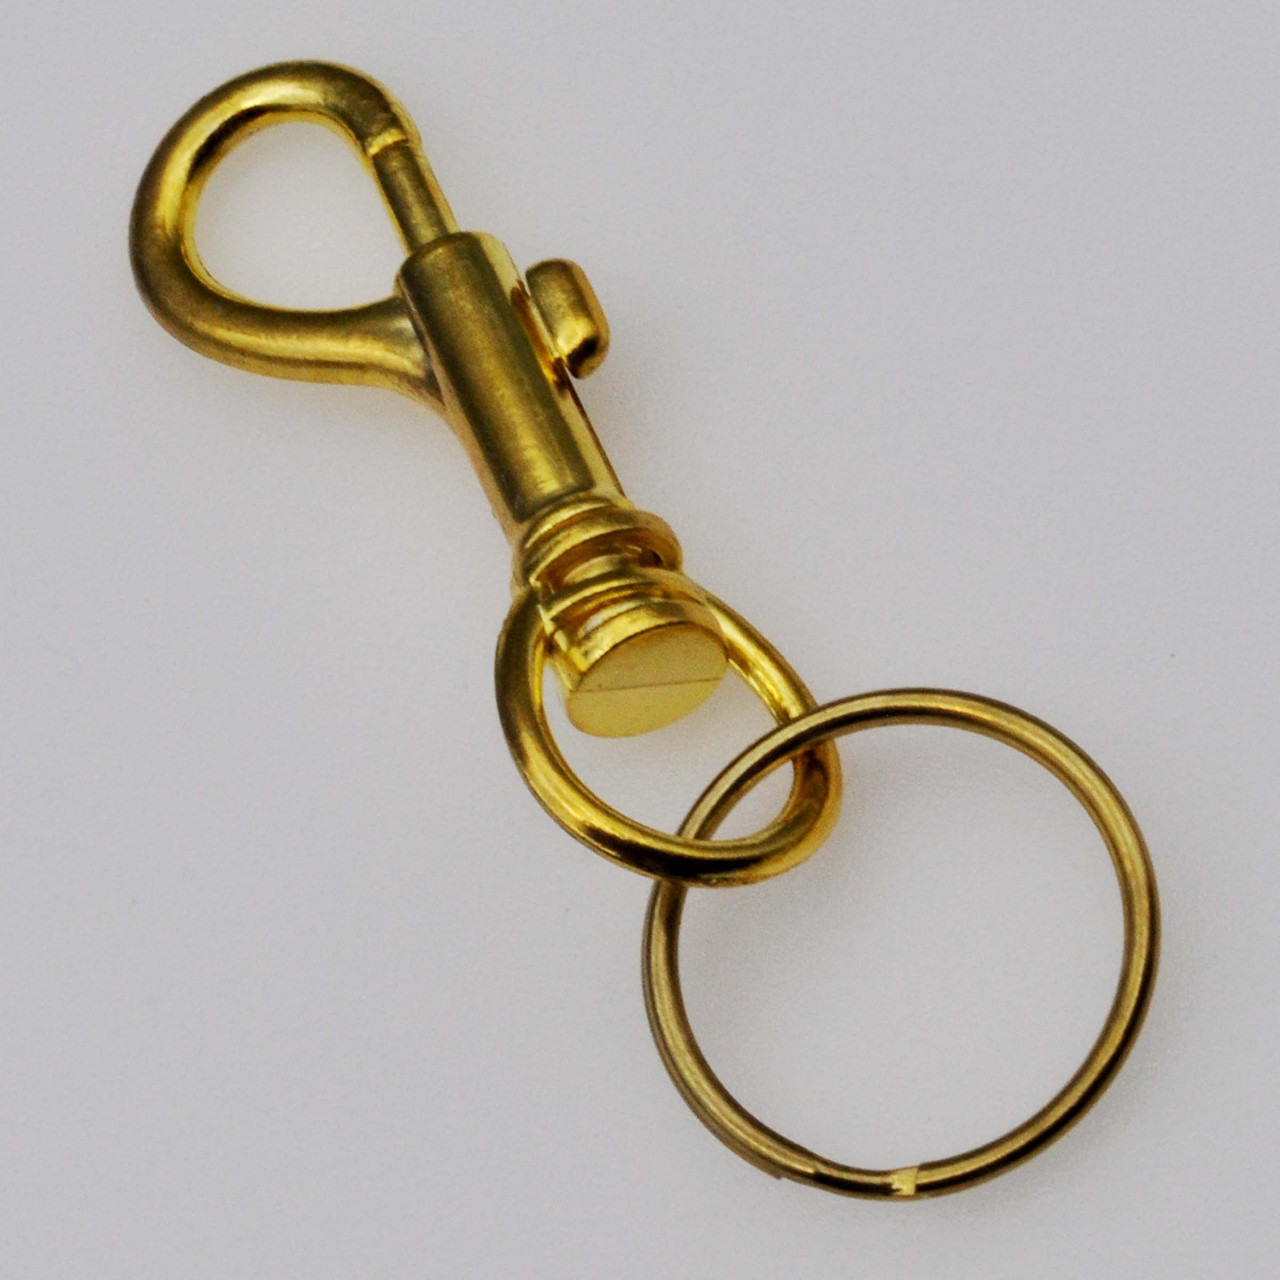 Bonanza Clip Economy Snap Clip Key Ring - Brass Plated